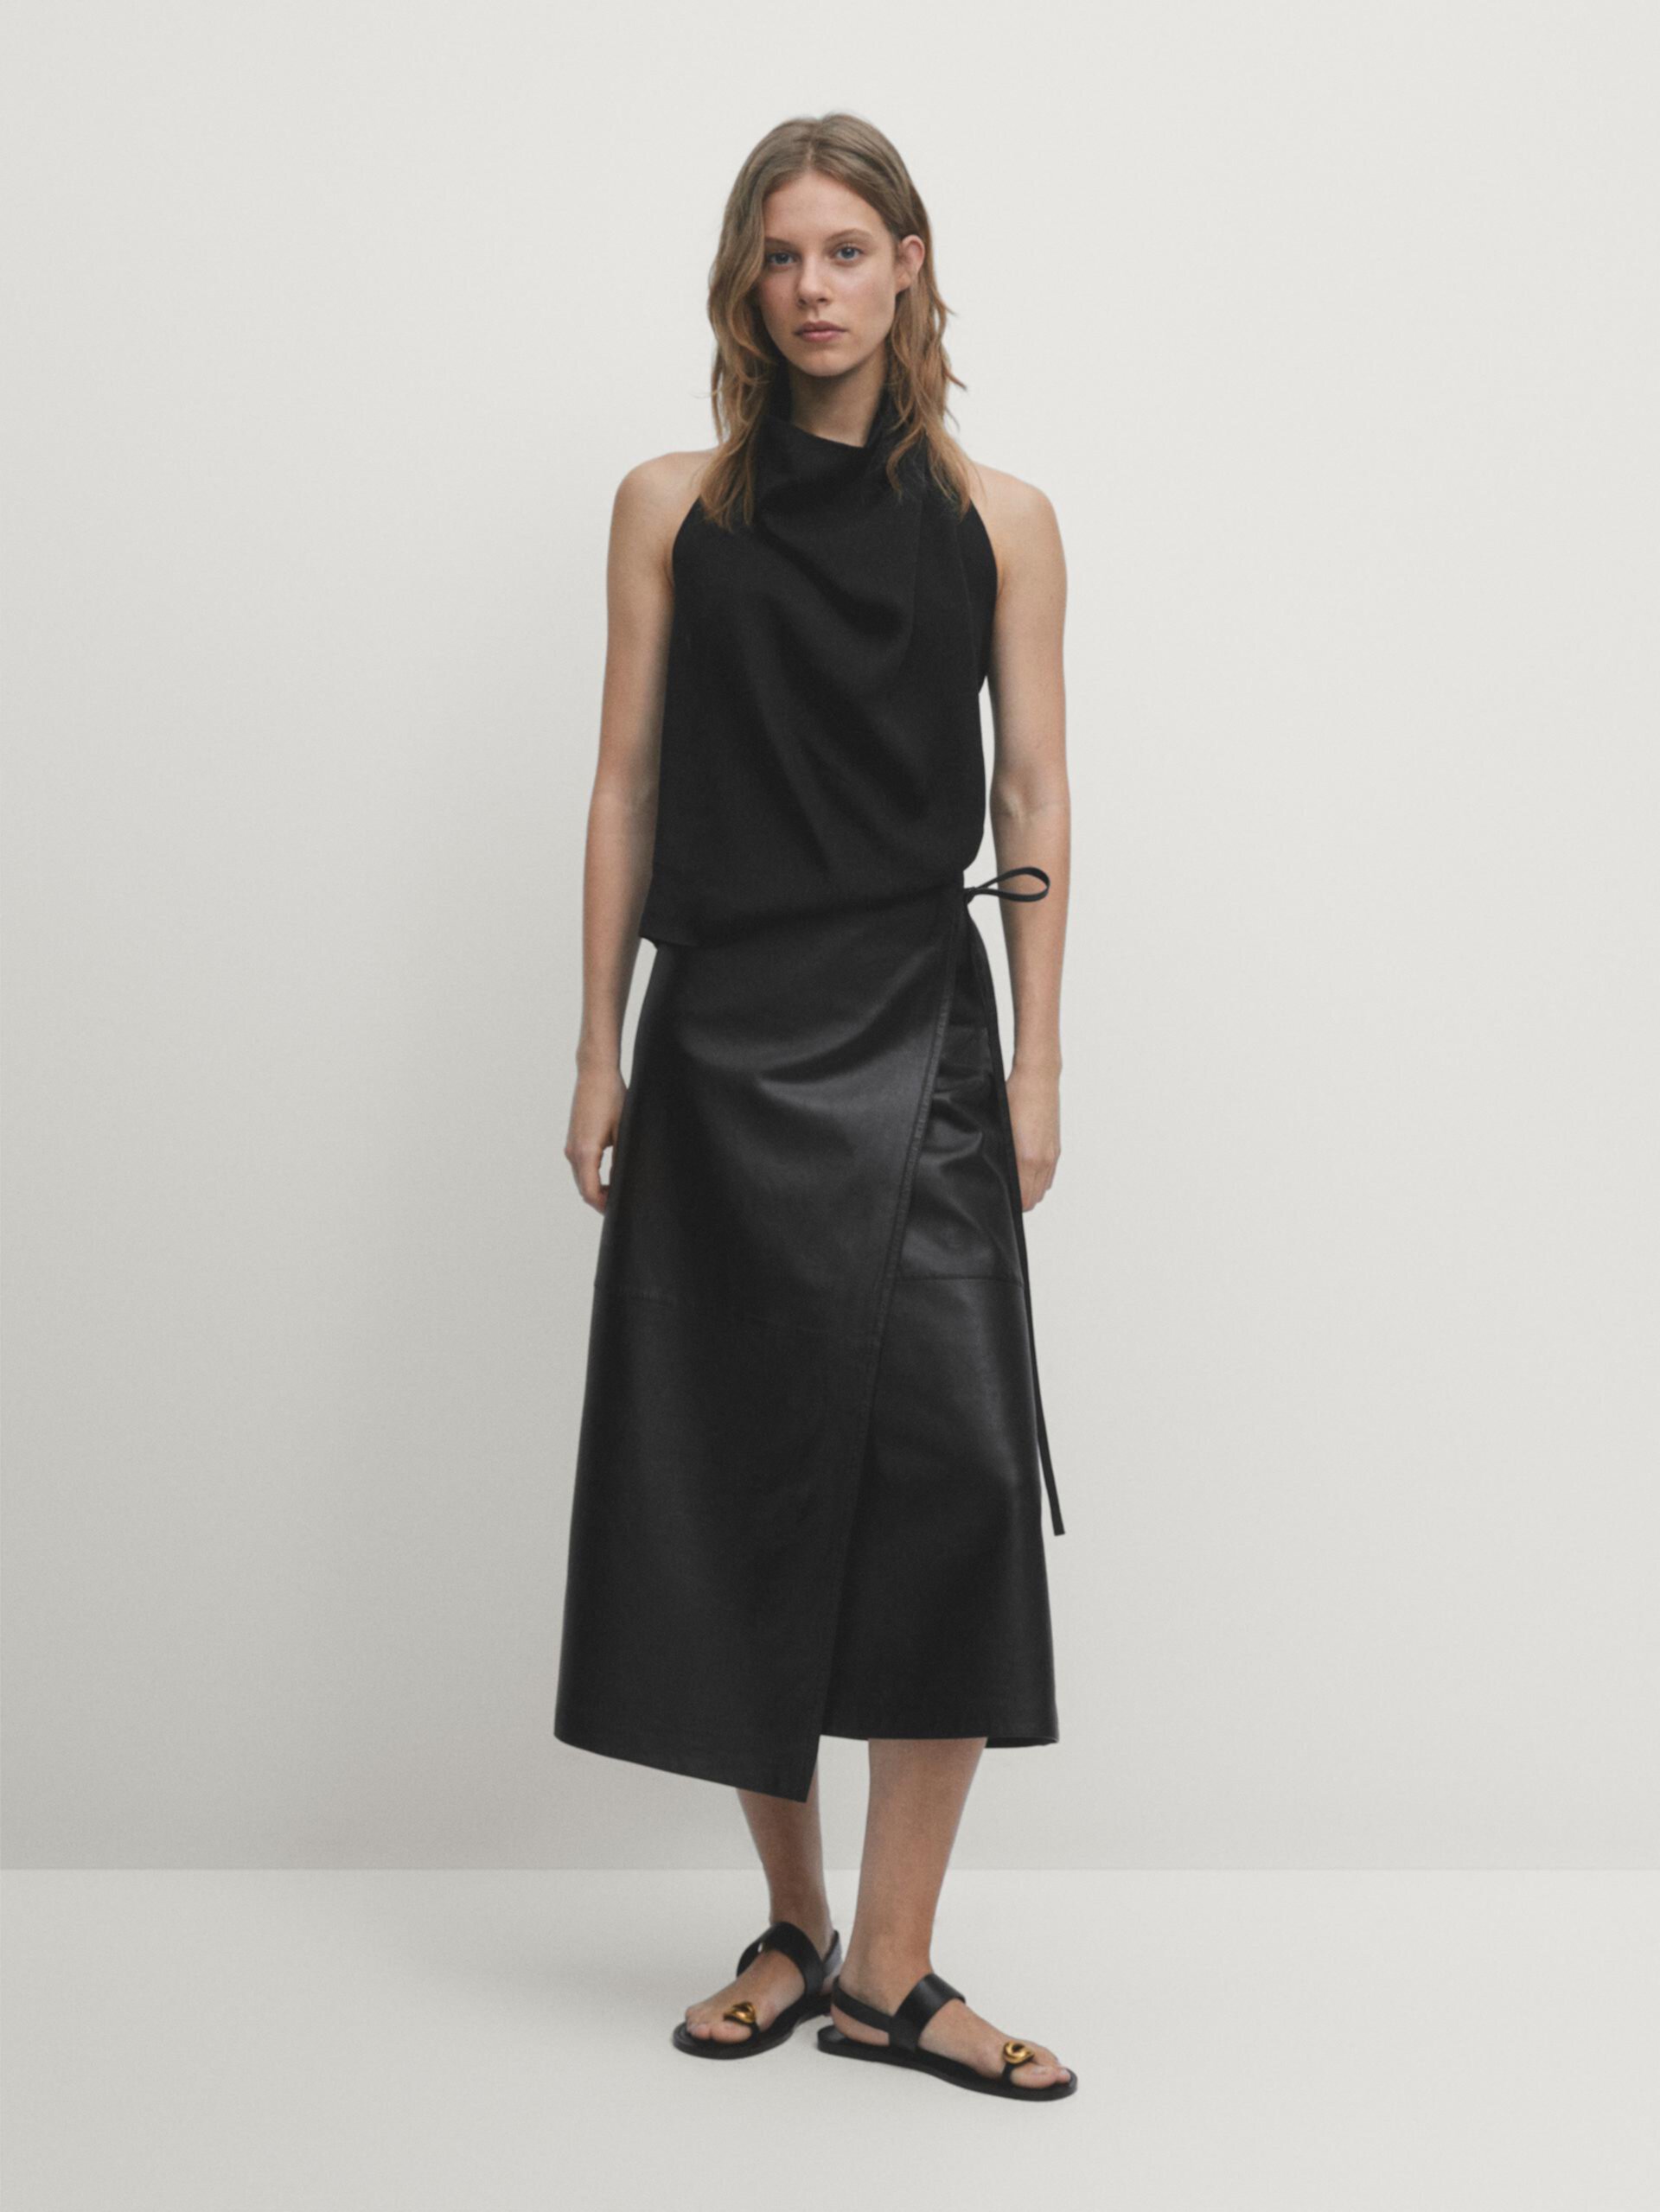 Leather skirt with tie detail ZARA